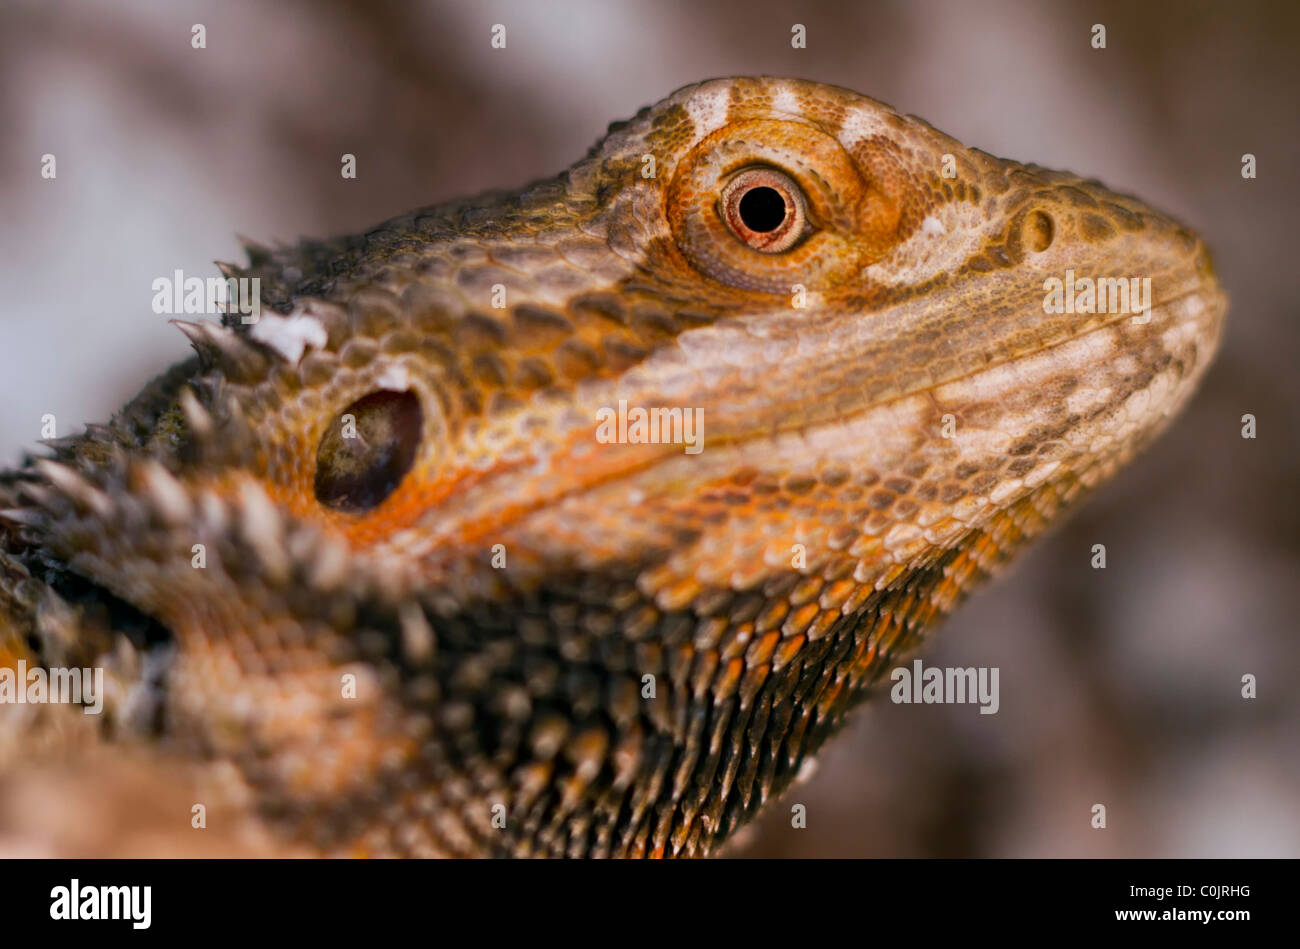 Closeup of the bearded dragon reptile. Stock Photo